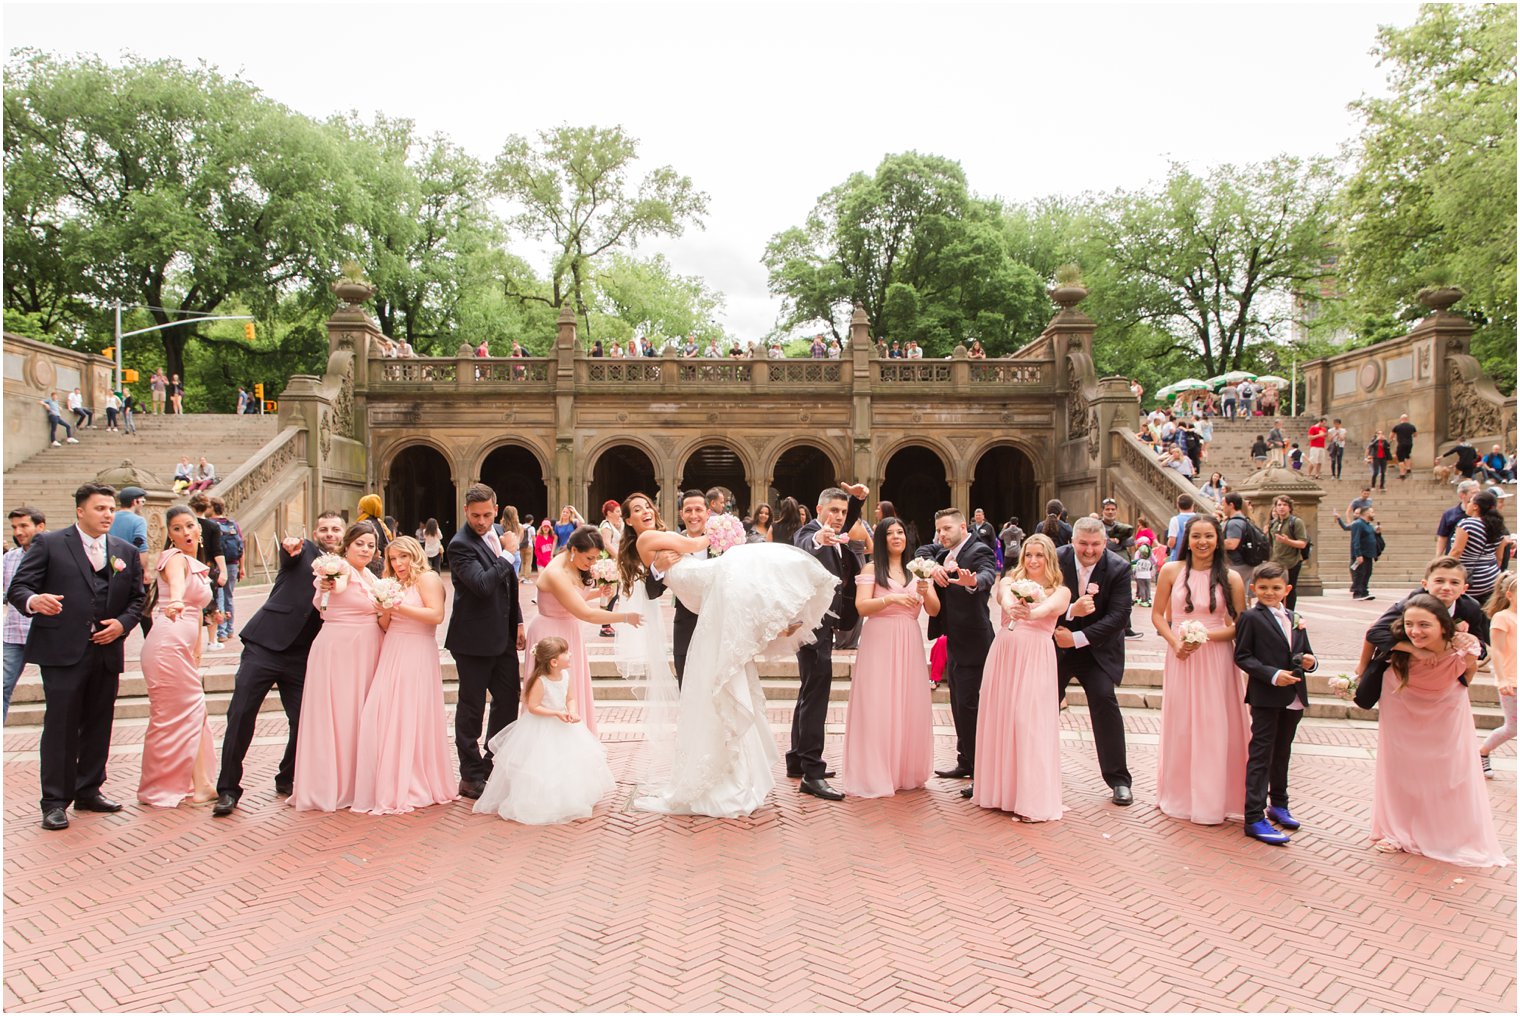 Central Park bridal party photo | Photo by Idalia Photography